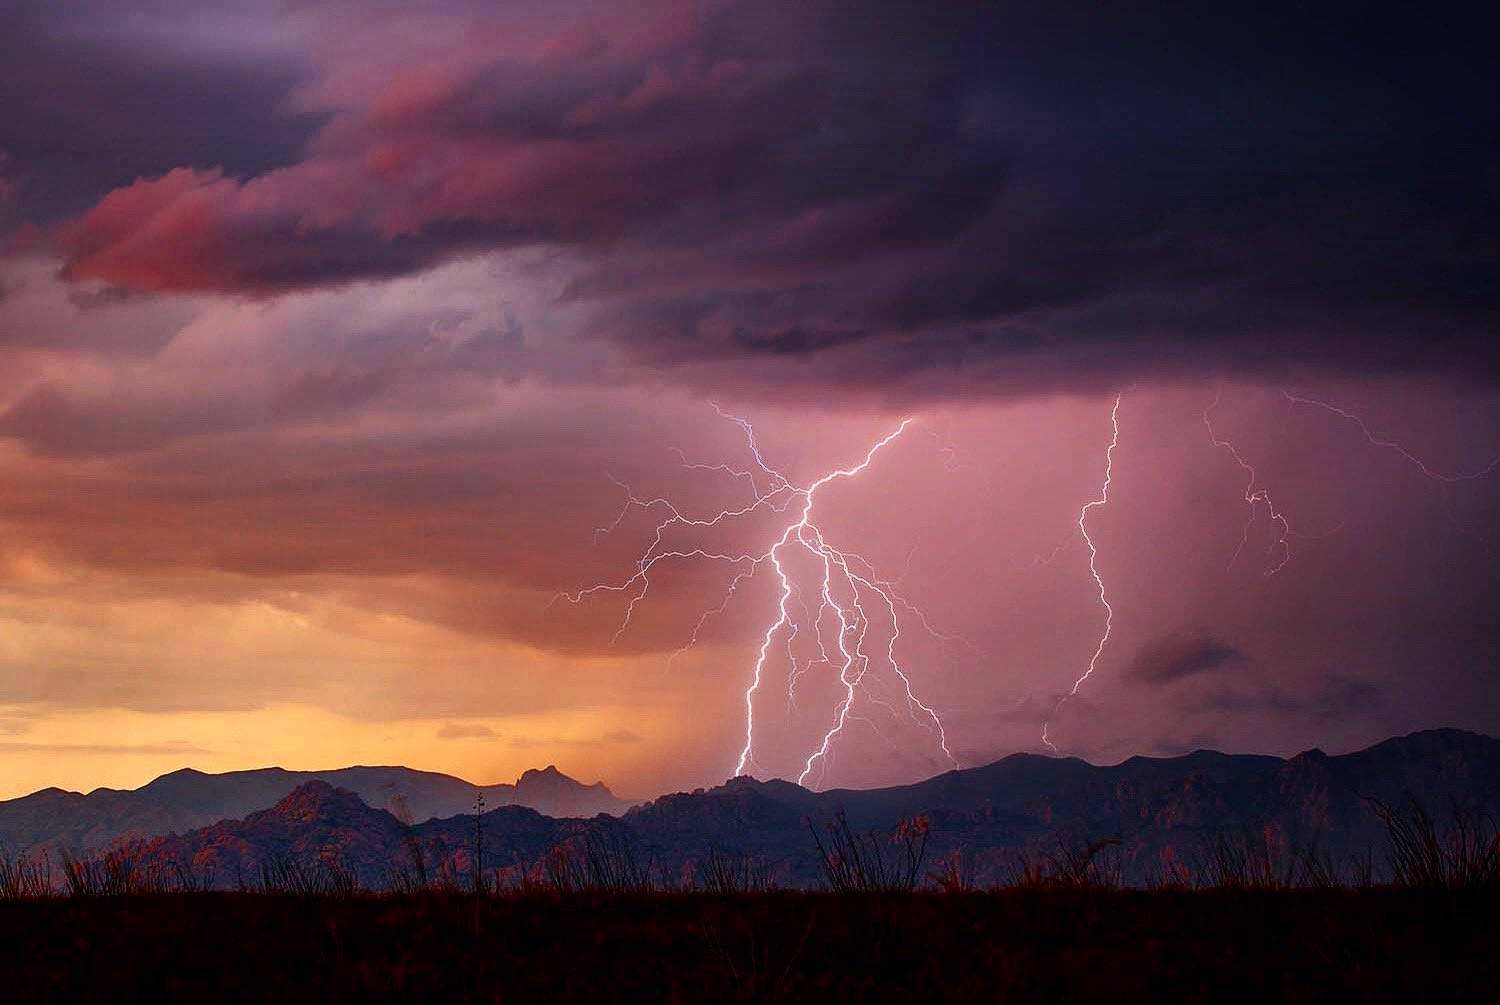 Lightning strikes in the mountains near Benson, AZ during a photogenic sunset monsoon storm by Mark J. Rebilas @rebilasphoto